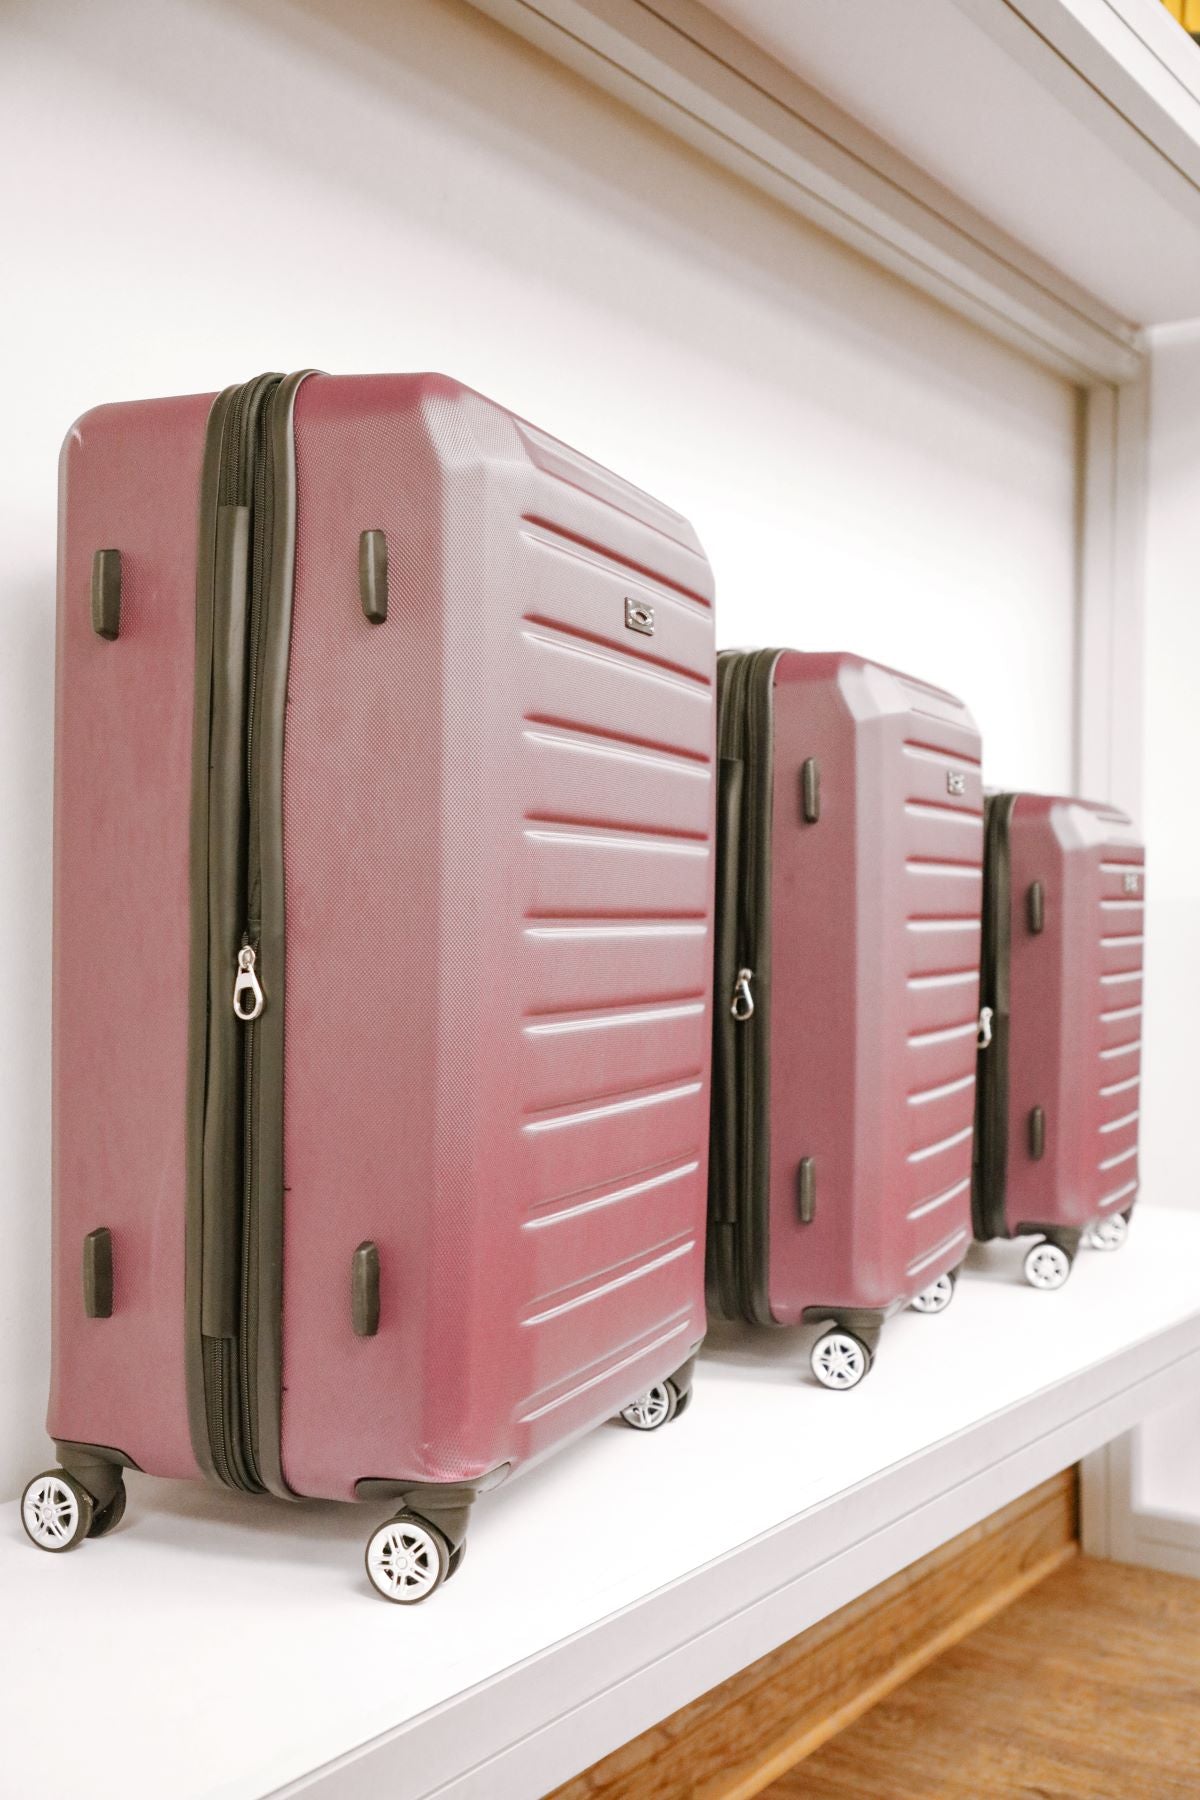 Hardside Suitcase with Wheels, Lightweight Away Luggage Set, 3-Piece Set,  Black 